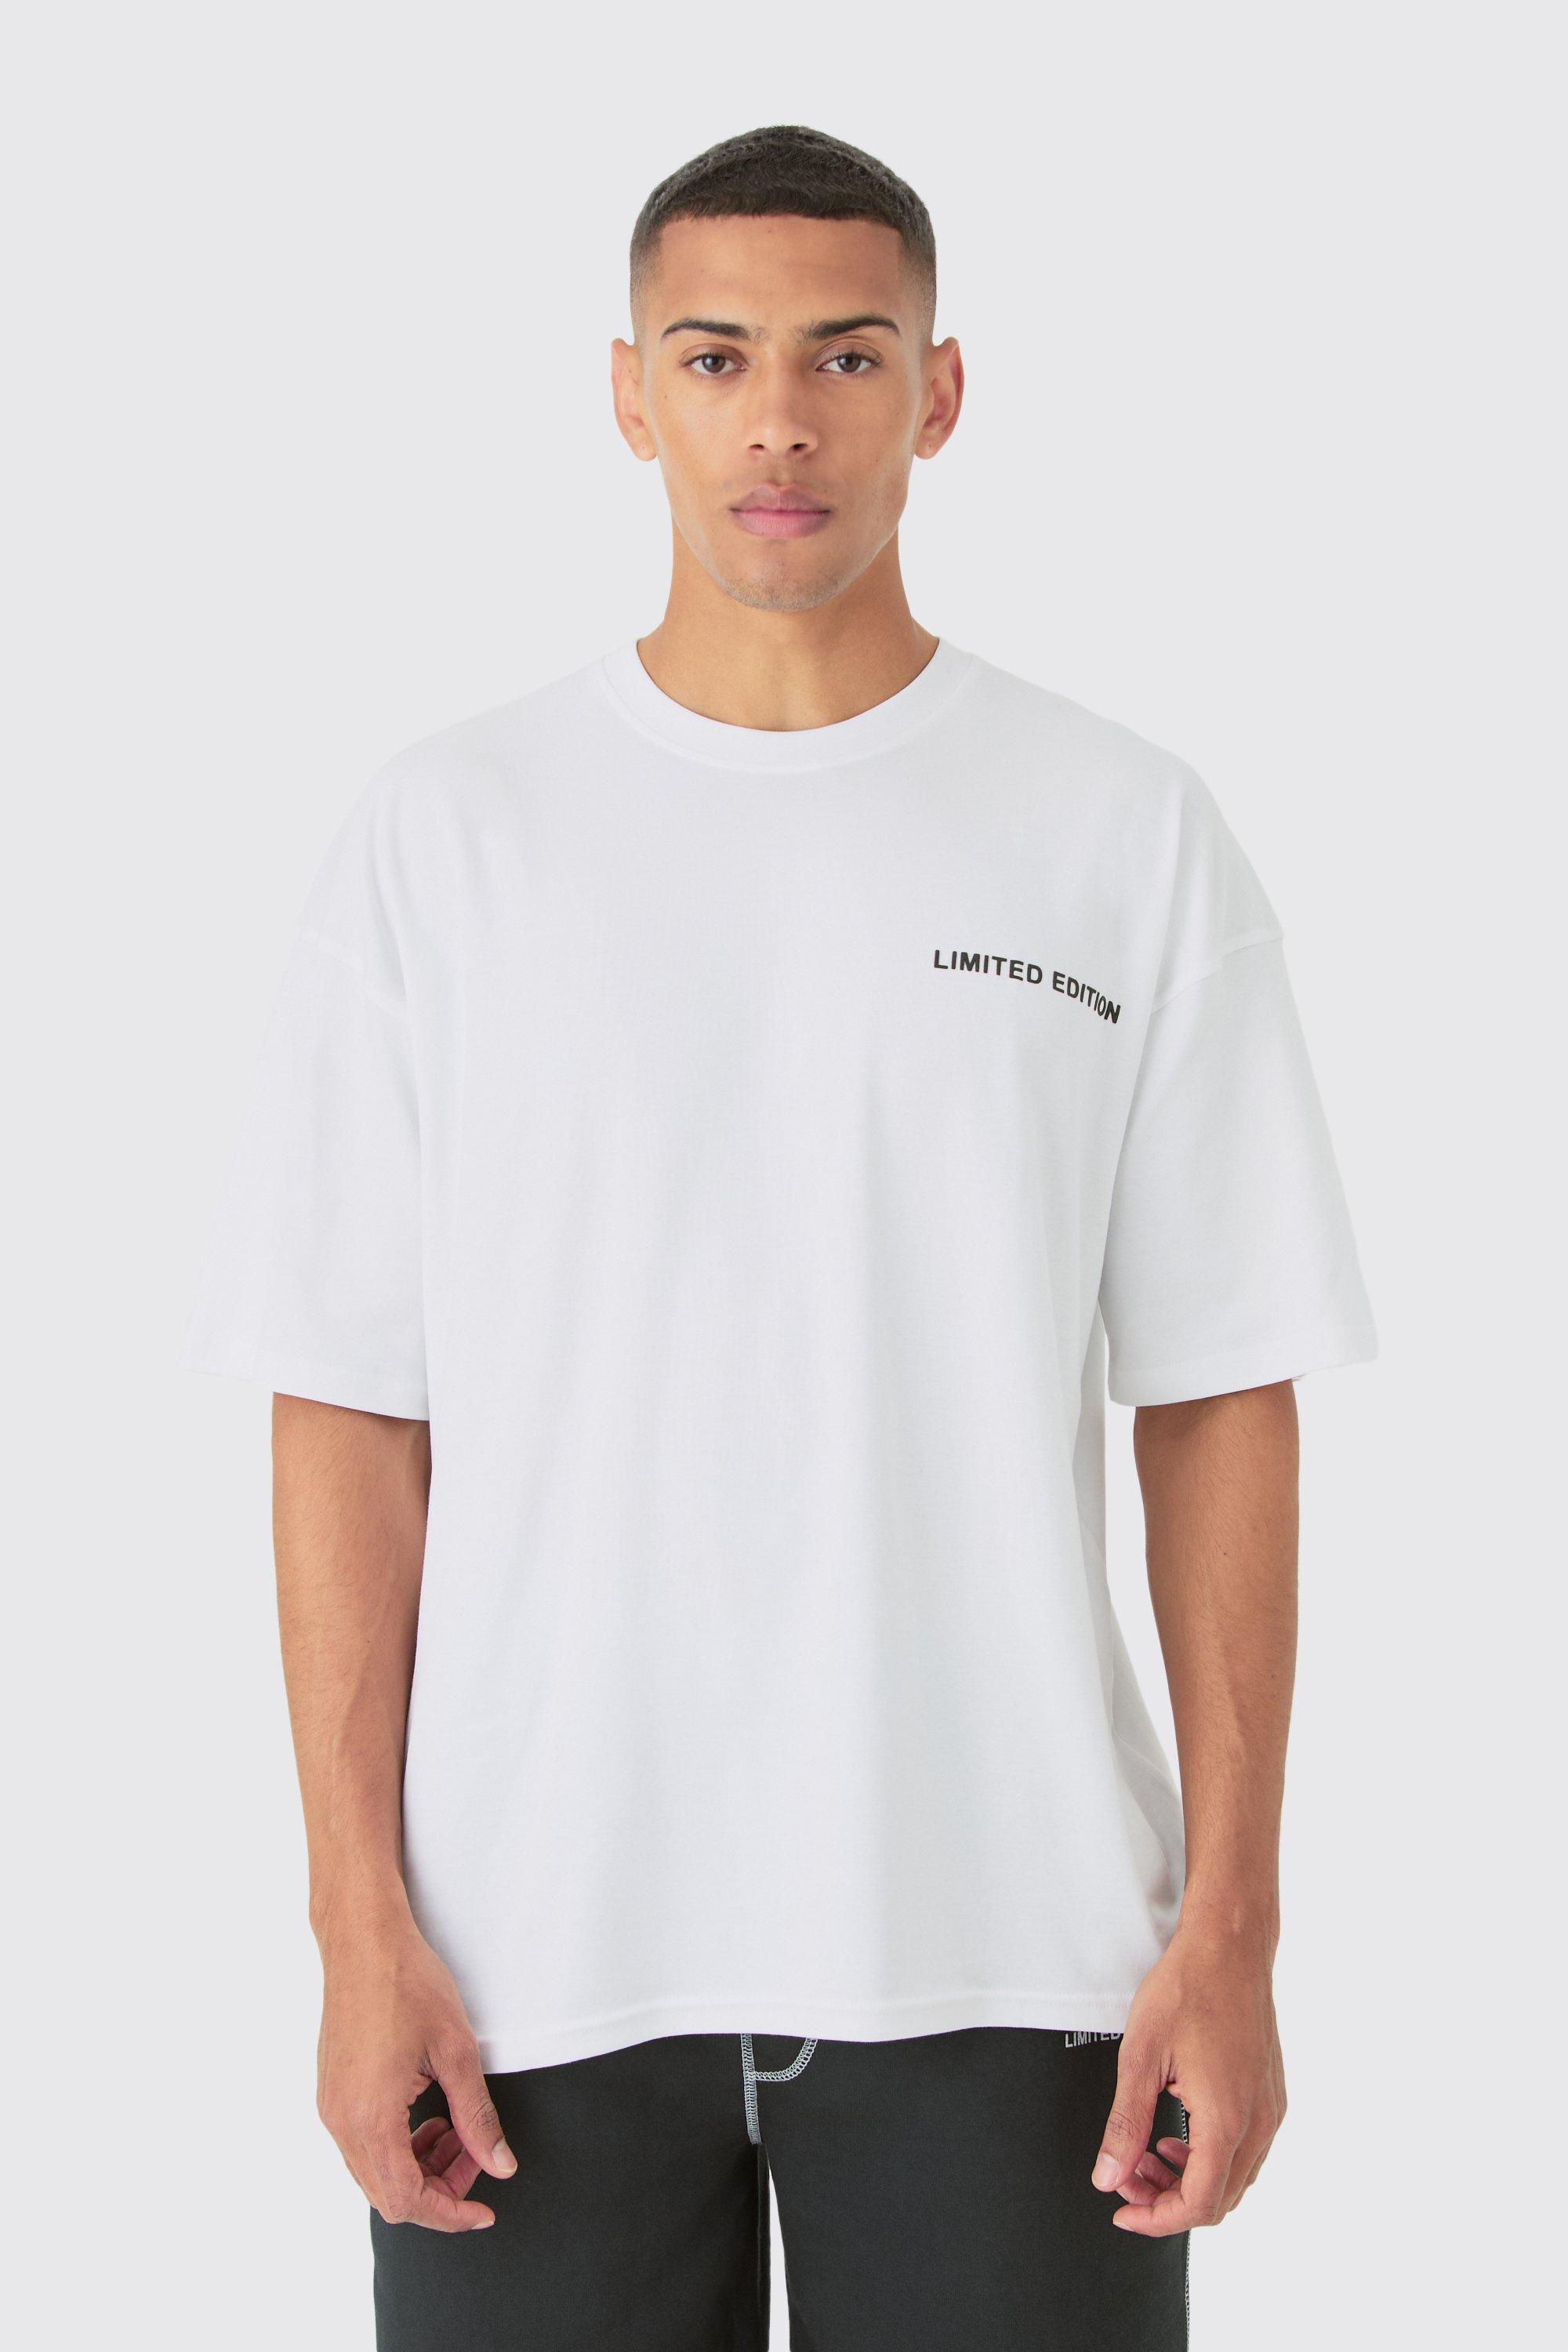 Premium Oversized Super Clean Limited Interlock T-shirt